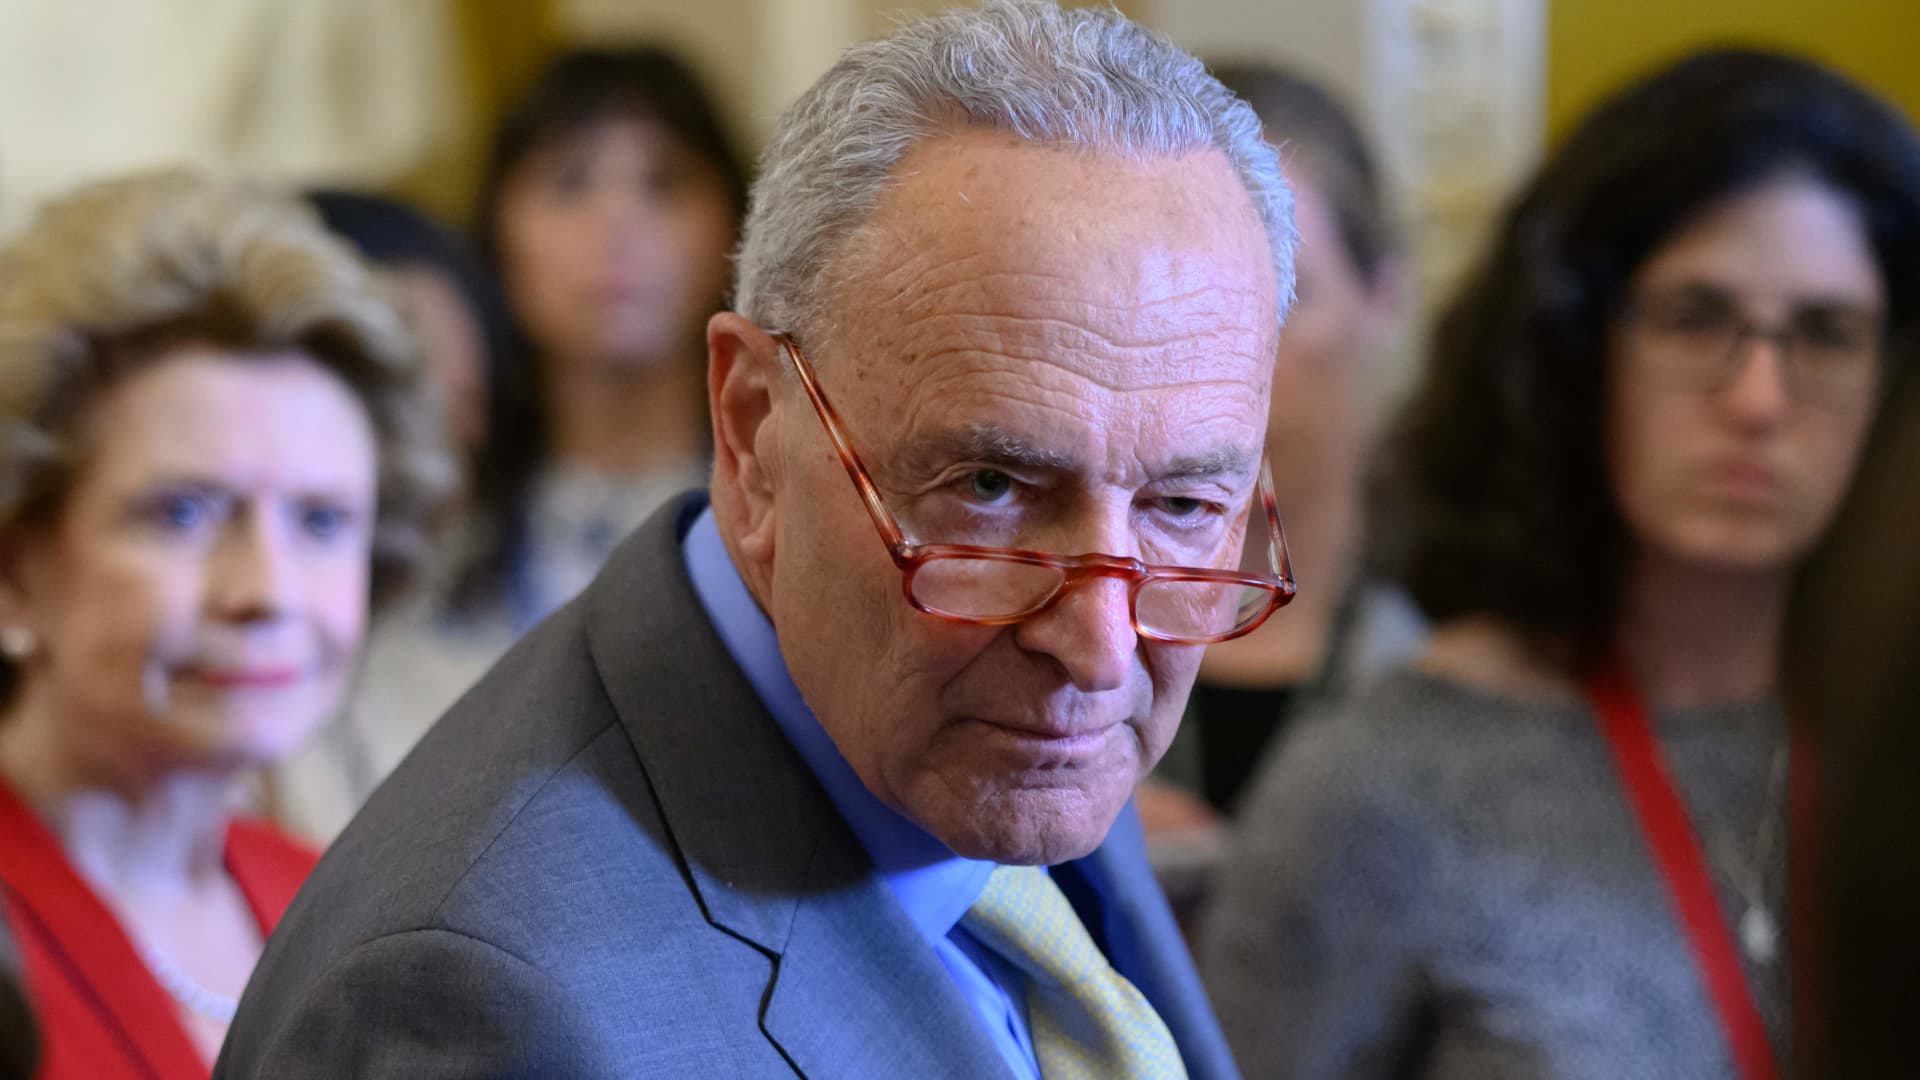 Senate to take up bill, Schumer seeks to fast-track vote